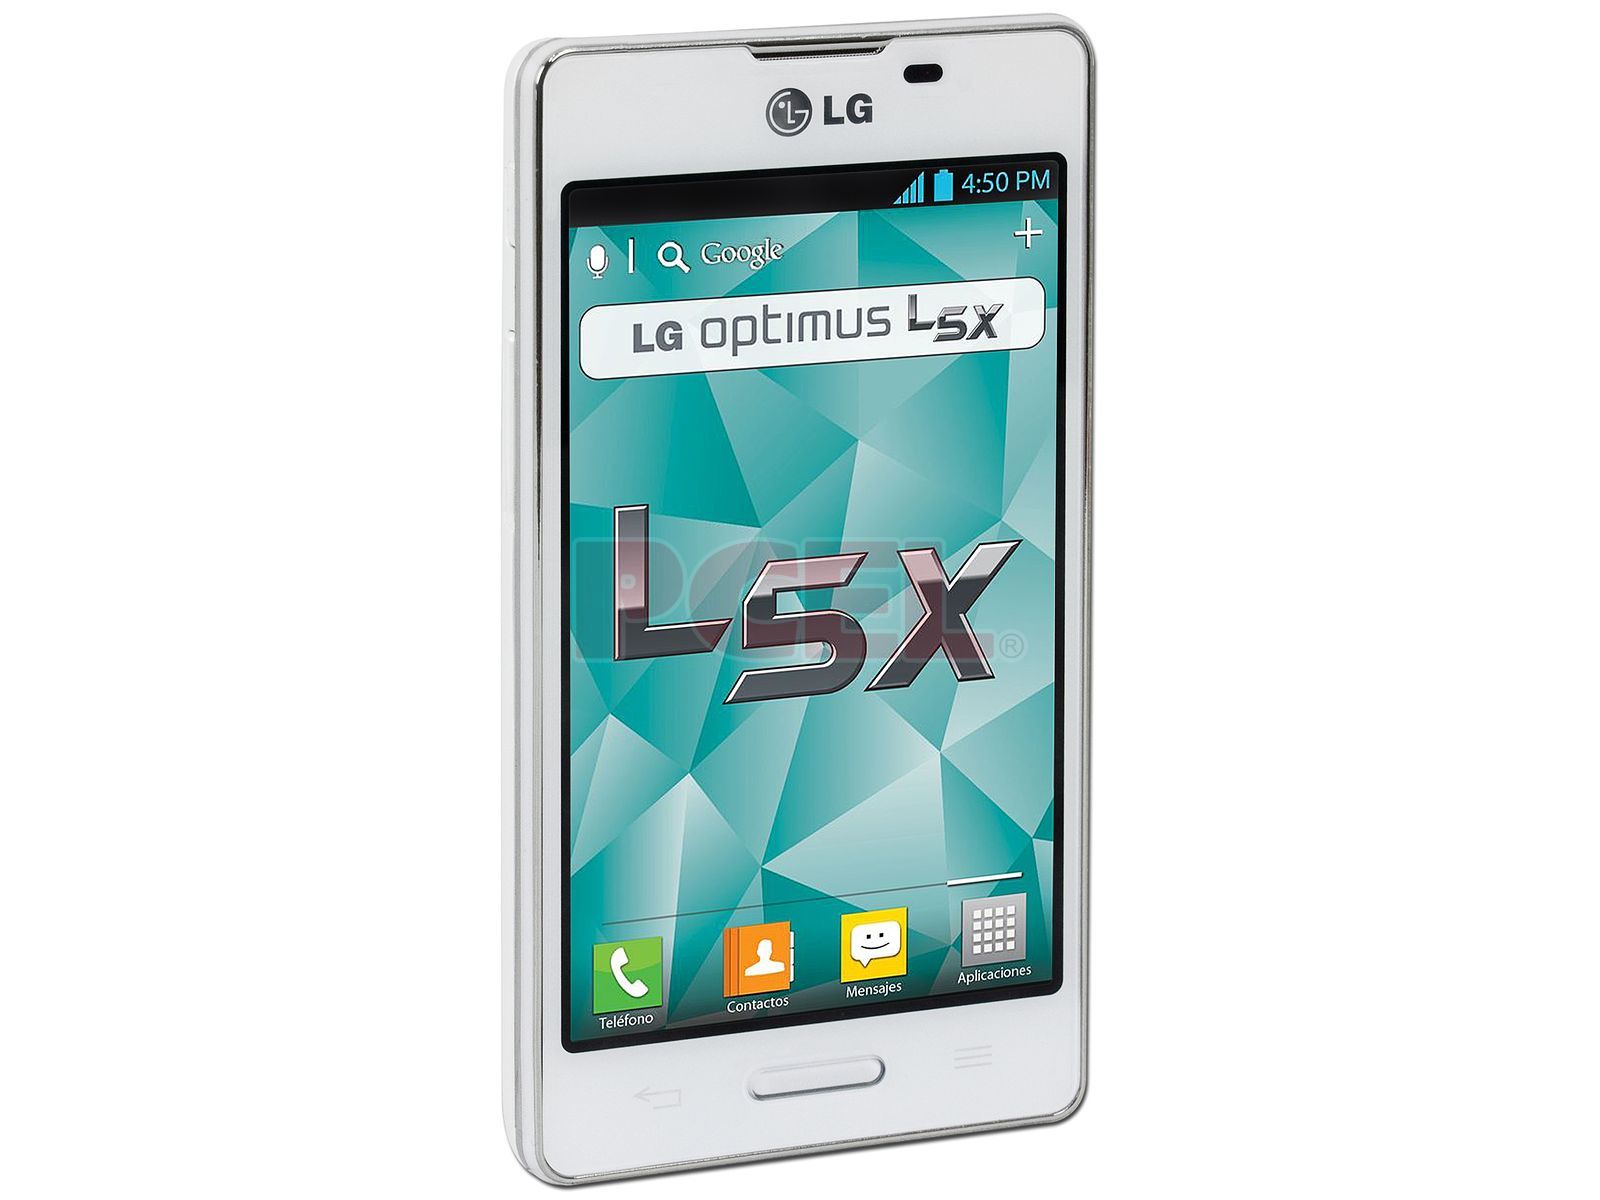 LG Optimus Vu, el smartphone-tablet con pantalla de 5 pulgadas - RedUSERS